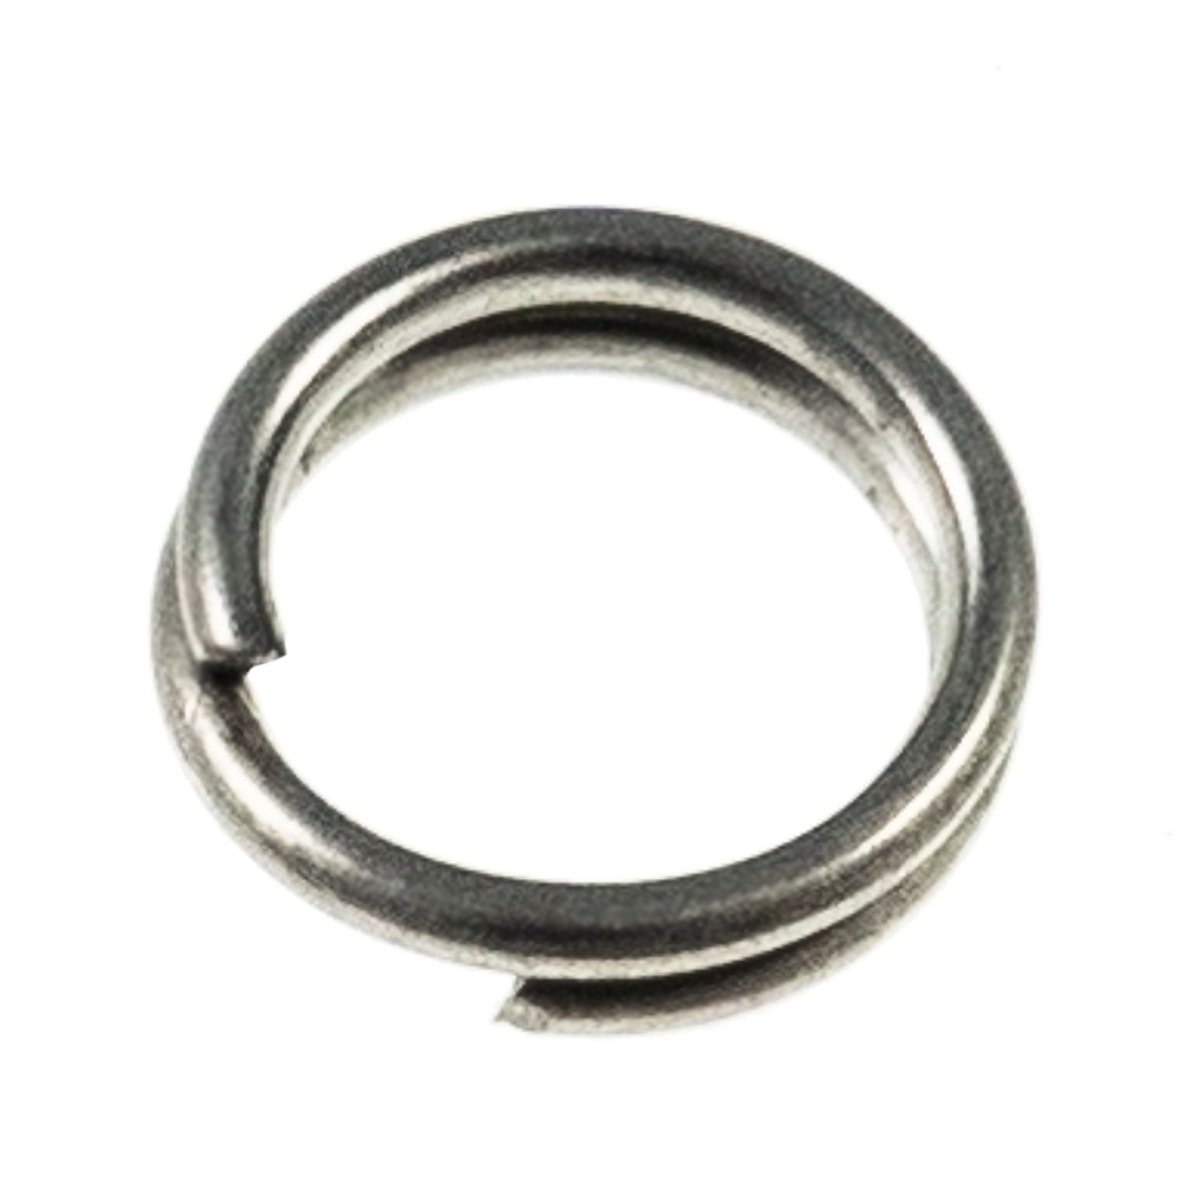 Stainless Steel Split Rings (100pk)